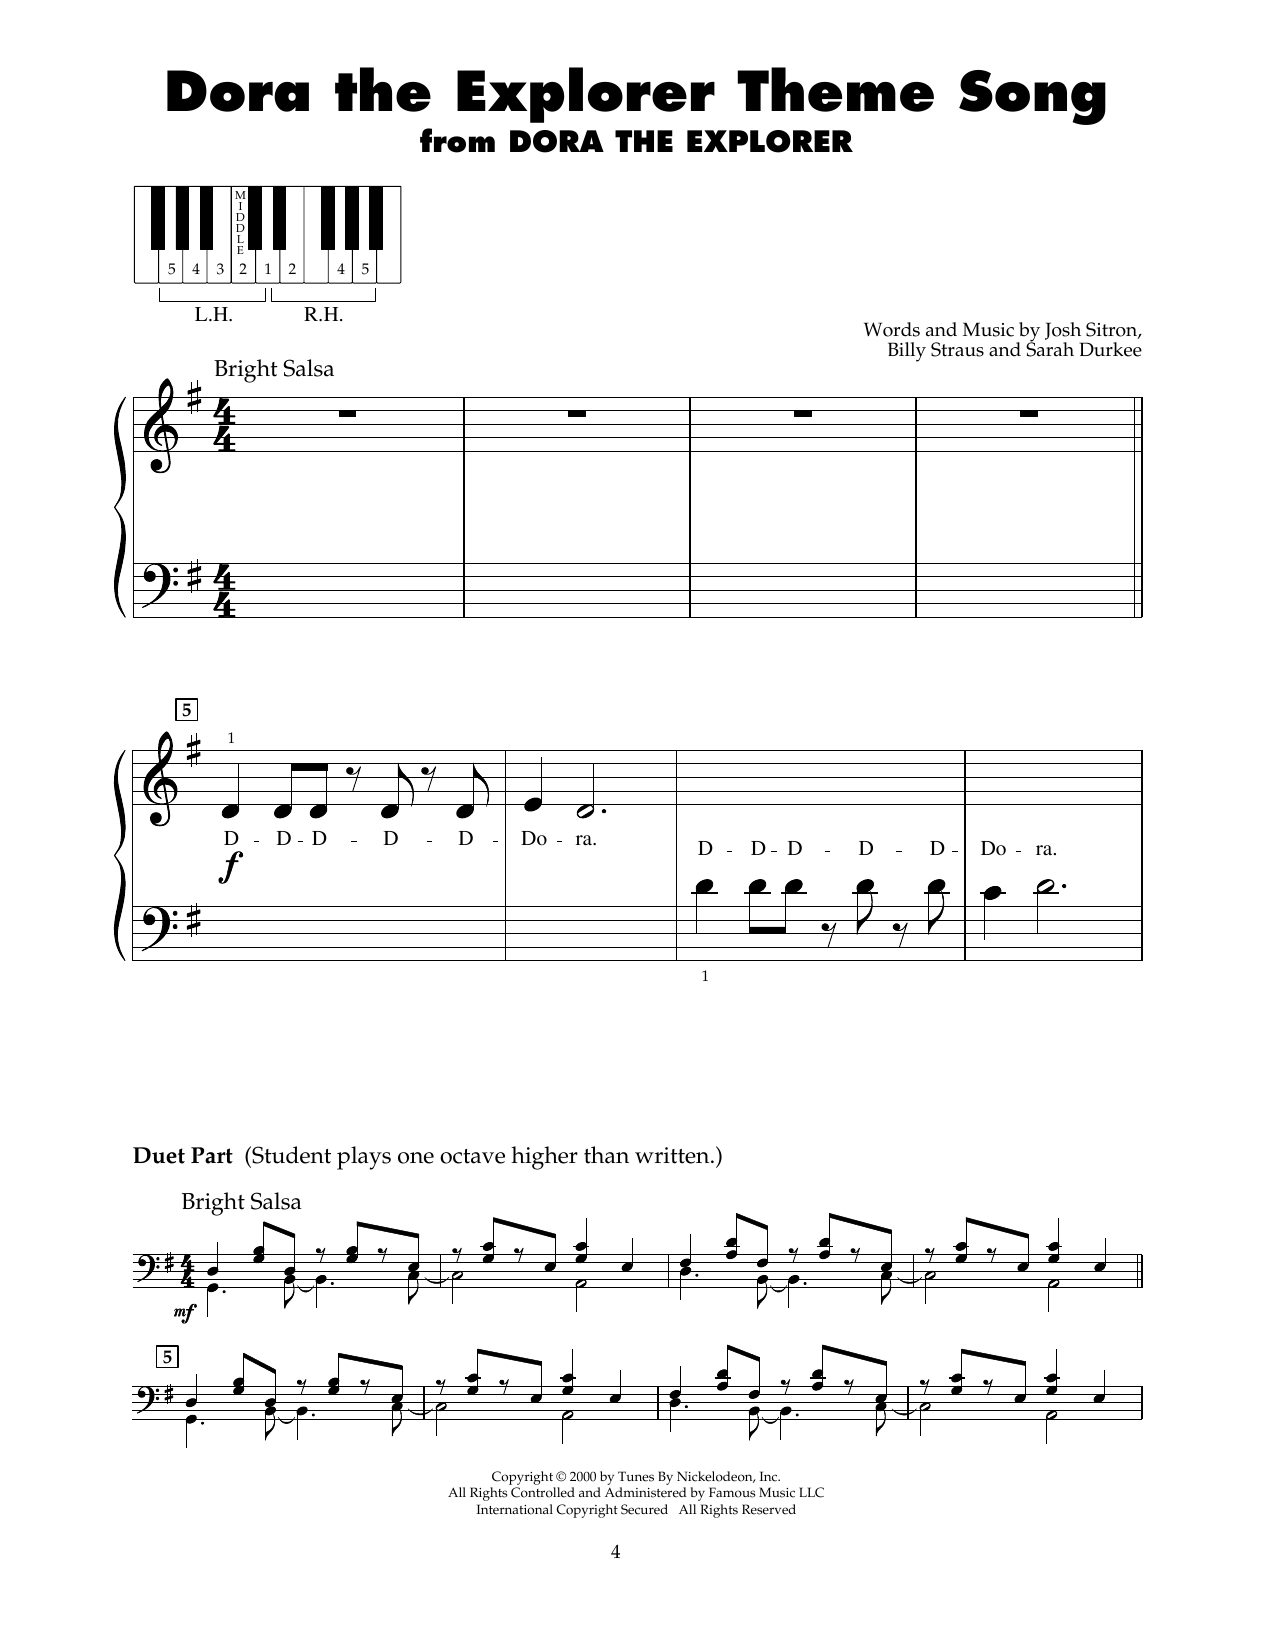 Joshua Sitron Dora The Explorer Theme Song sheet music notes and chords arranged for 5-Finger Piano